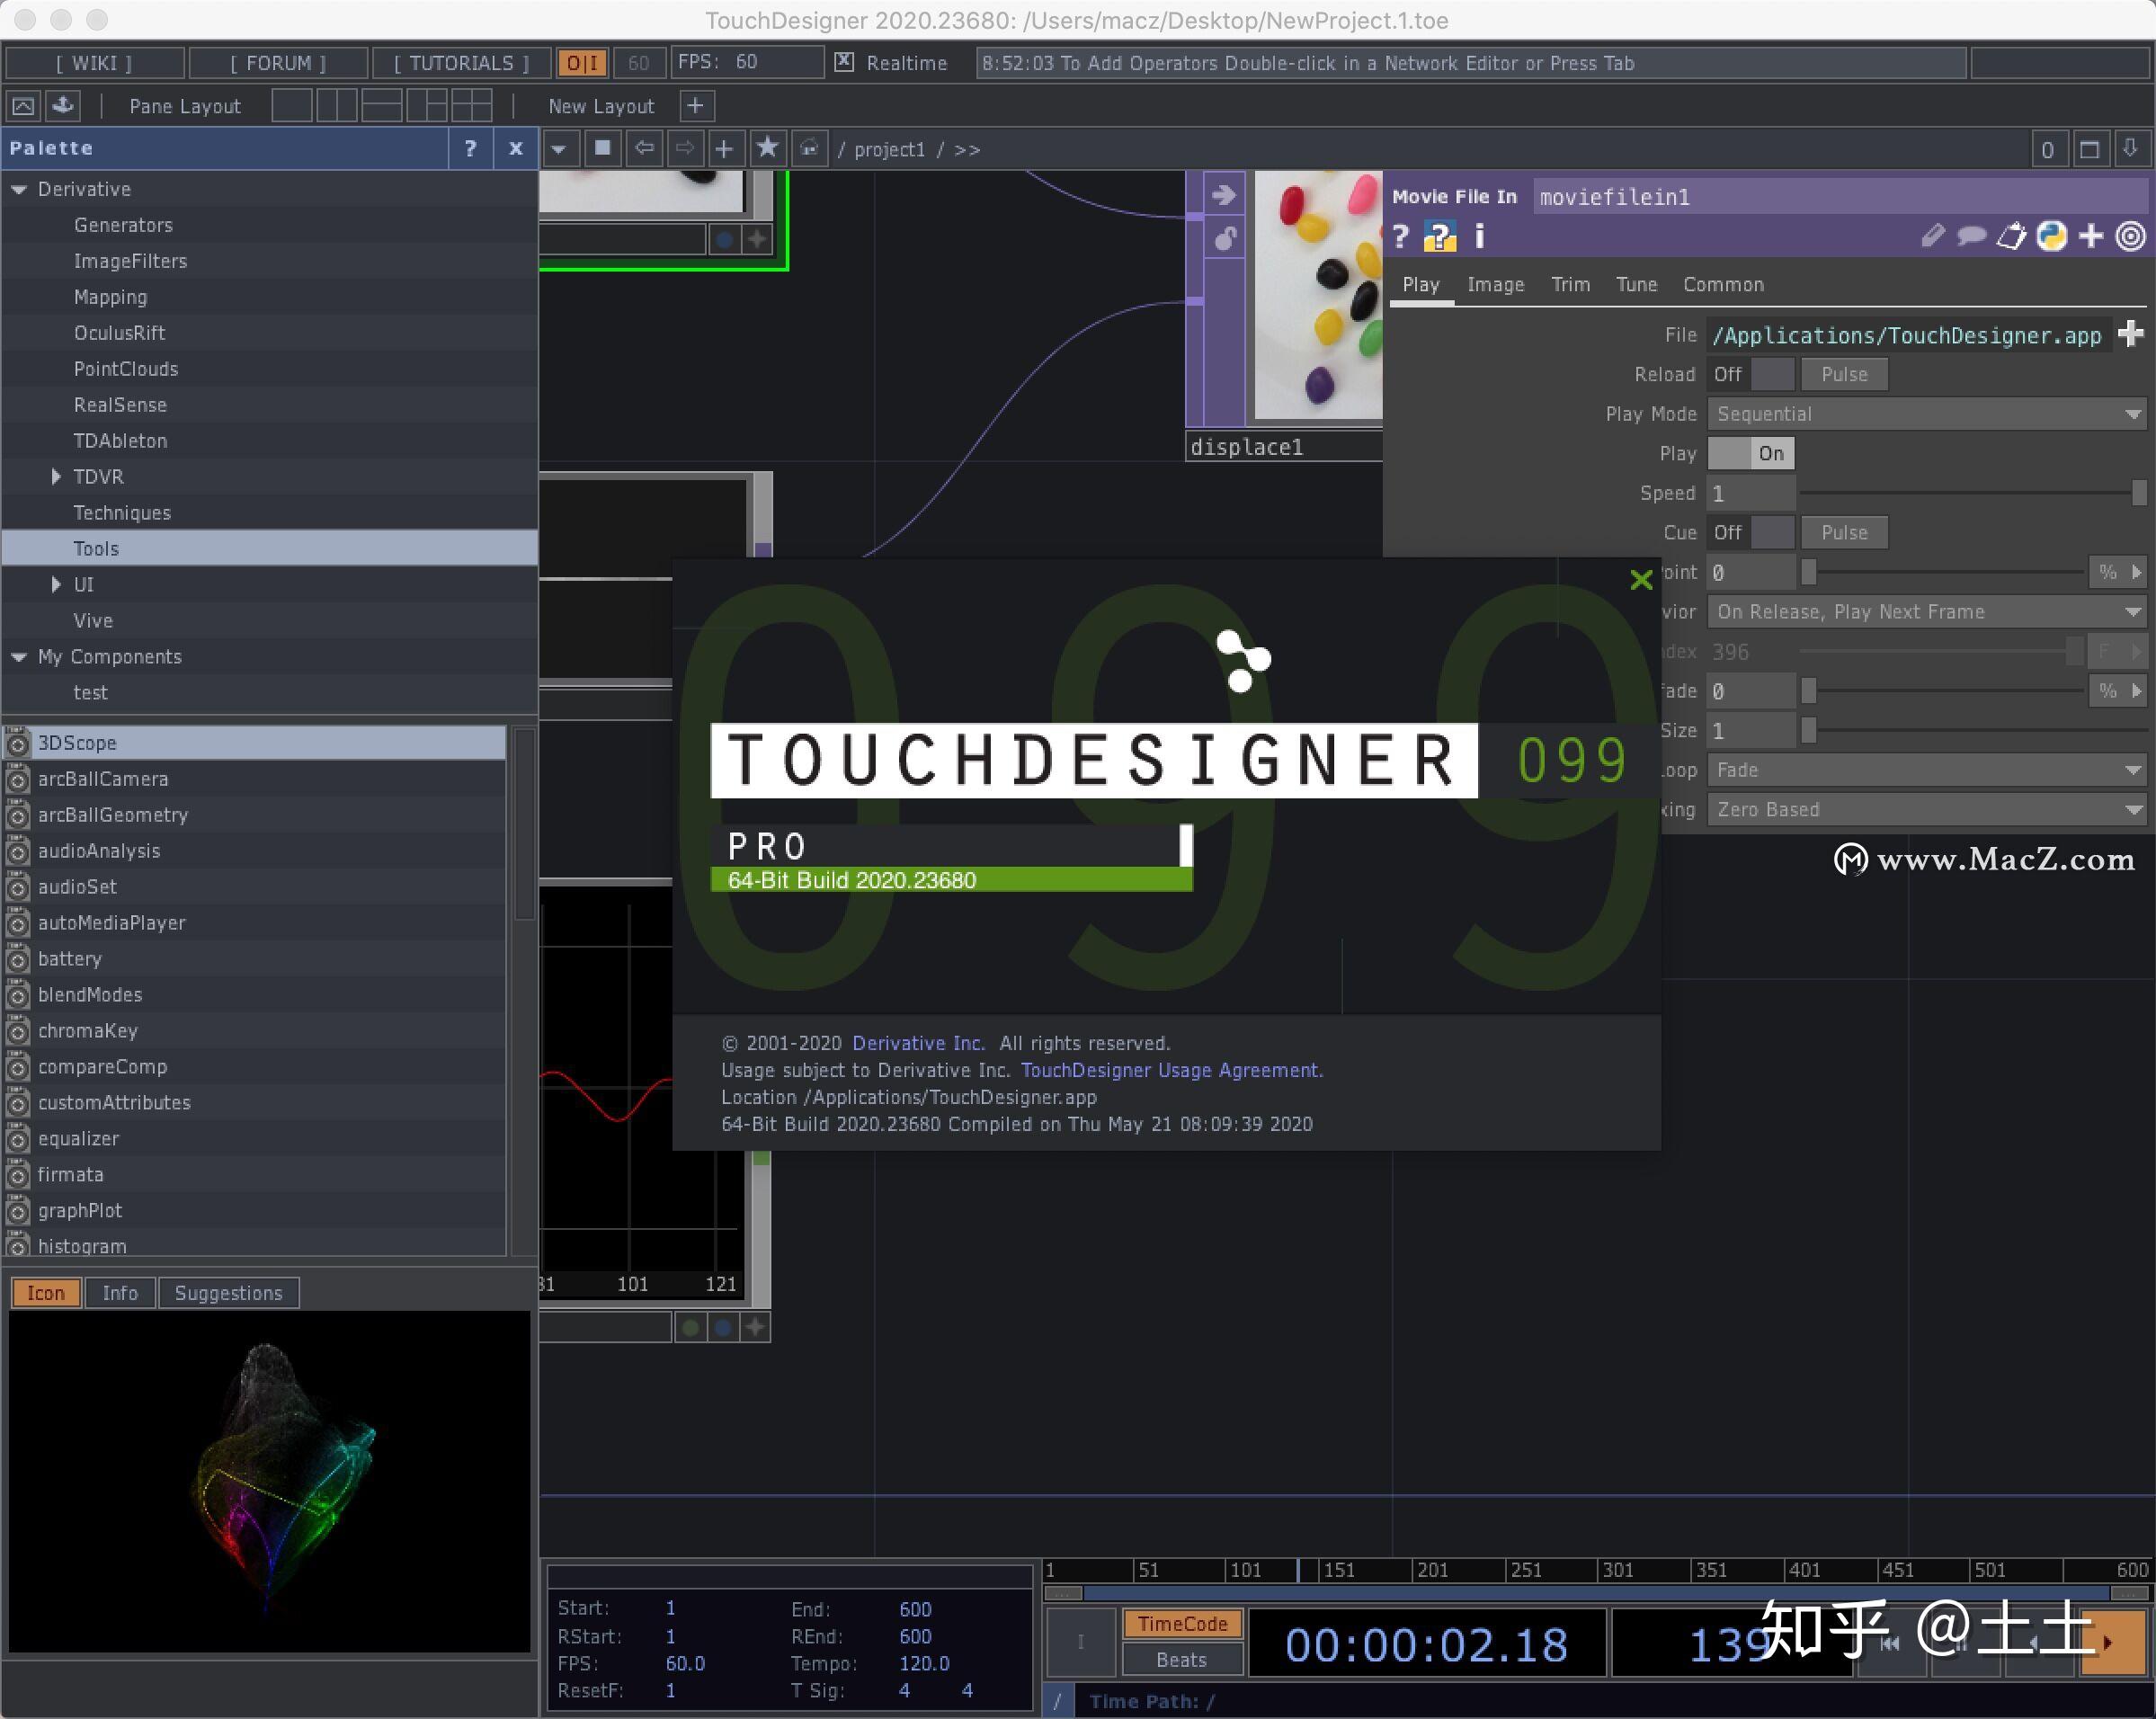 TouchDesigner Pro downloading